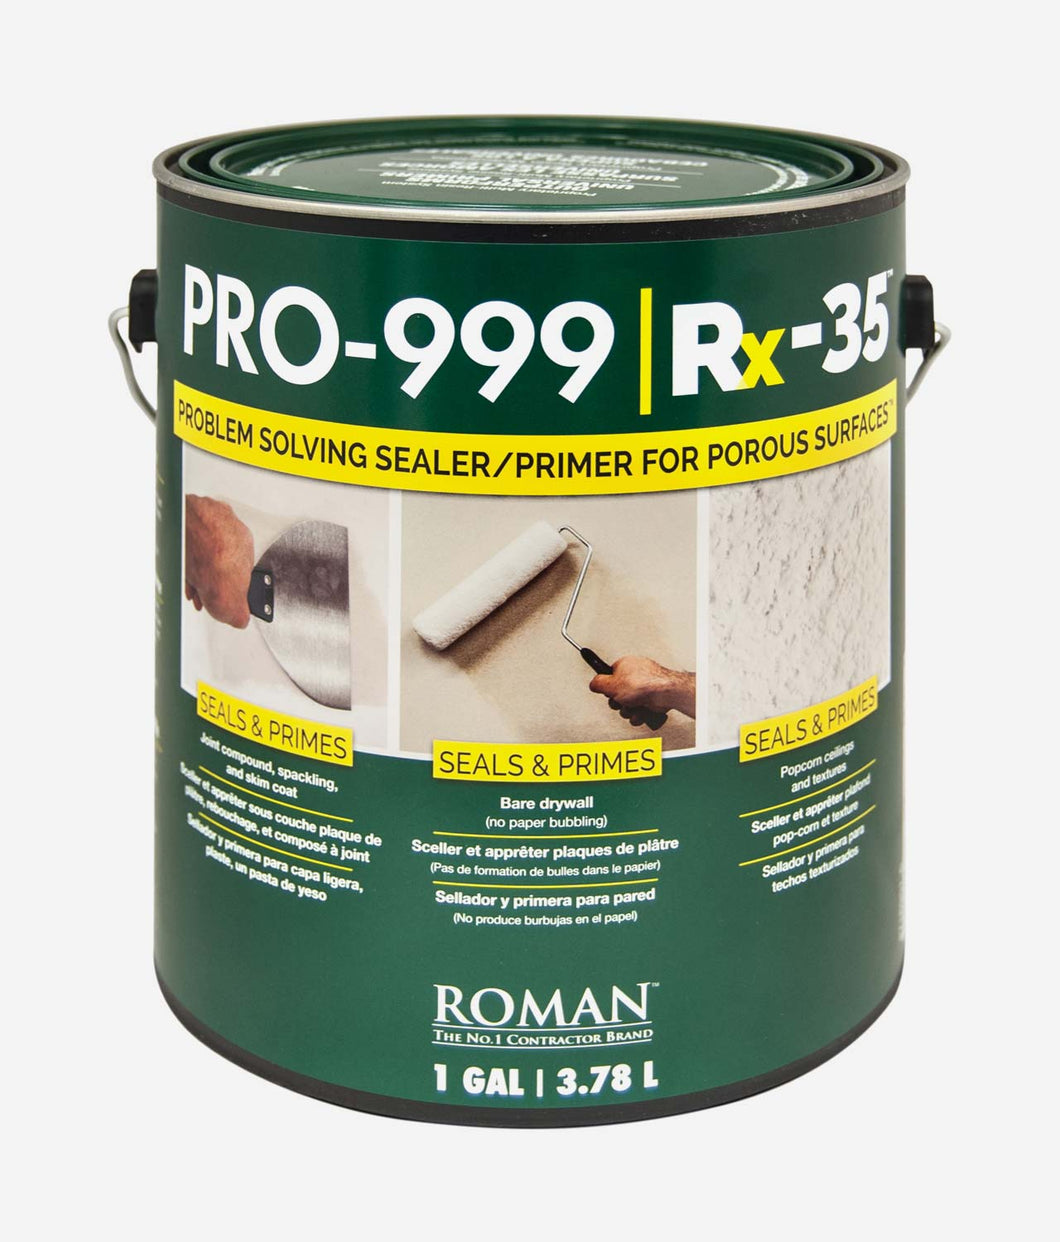 Roman PRO-999 RX-35 Sealer